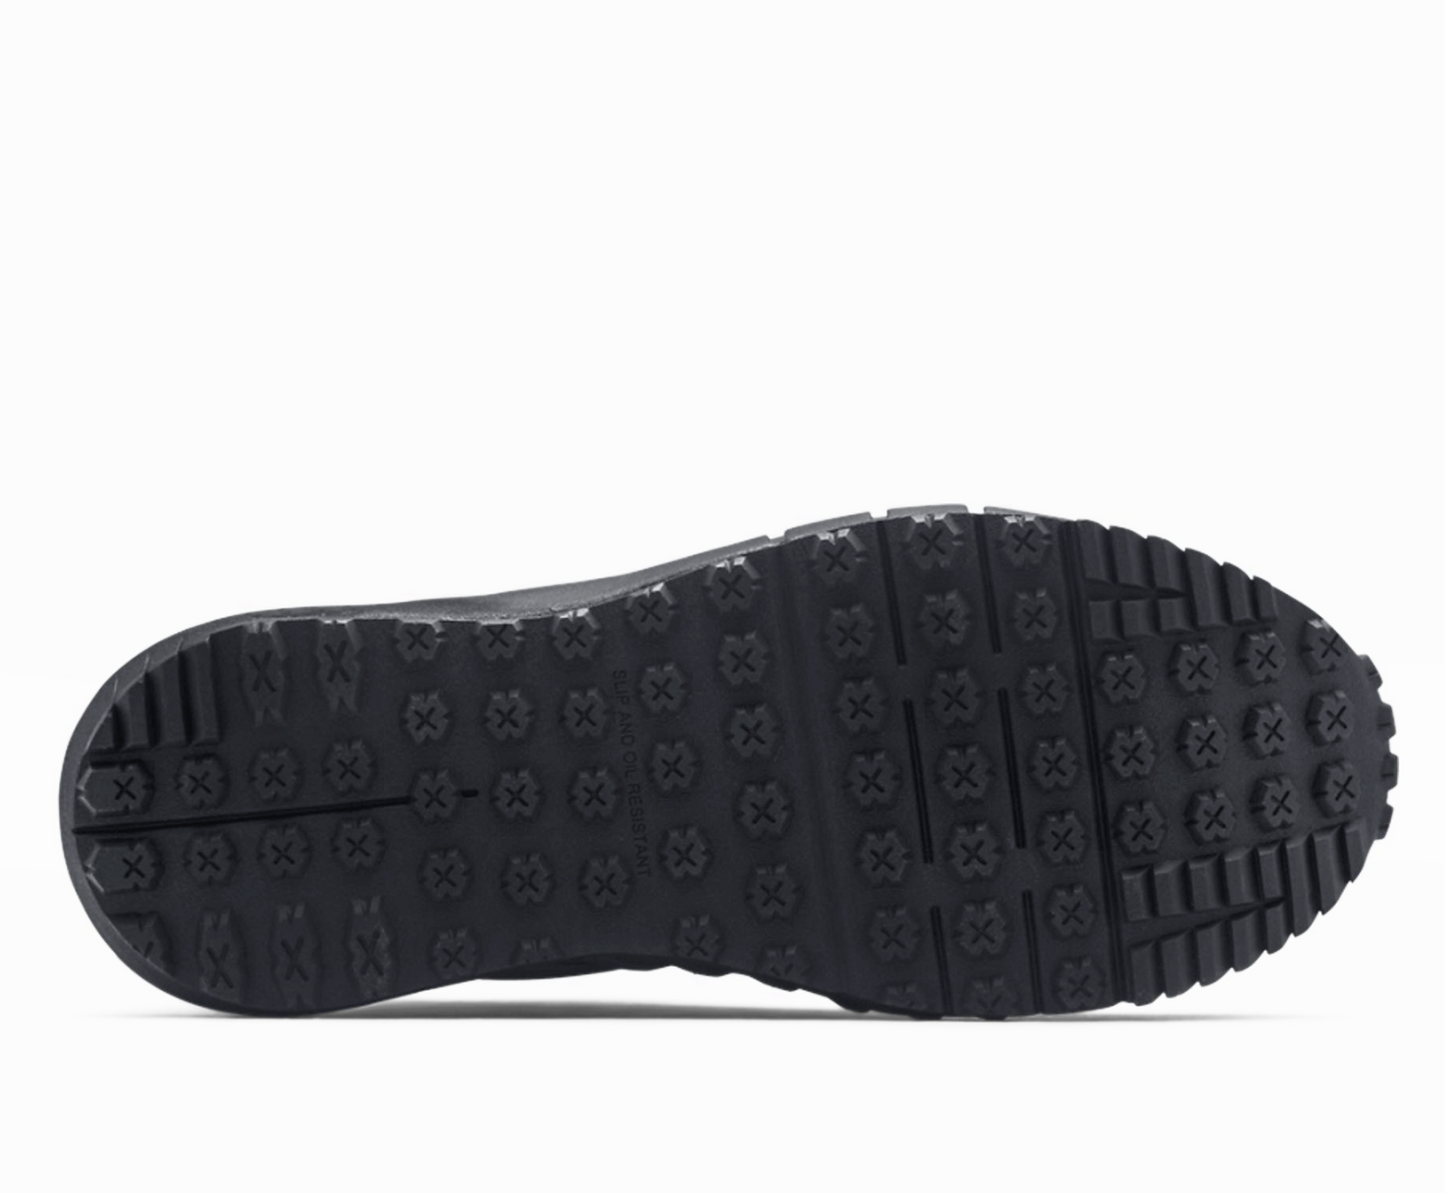 UA Micro G® Valsetz Mid Black Leather Waterproof Tactical Boots